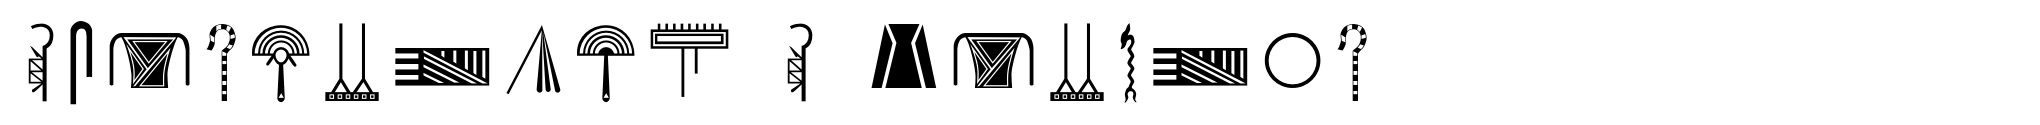 Hieroglyph H Regular image